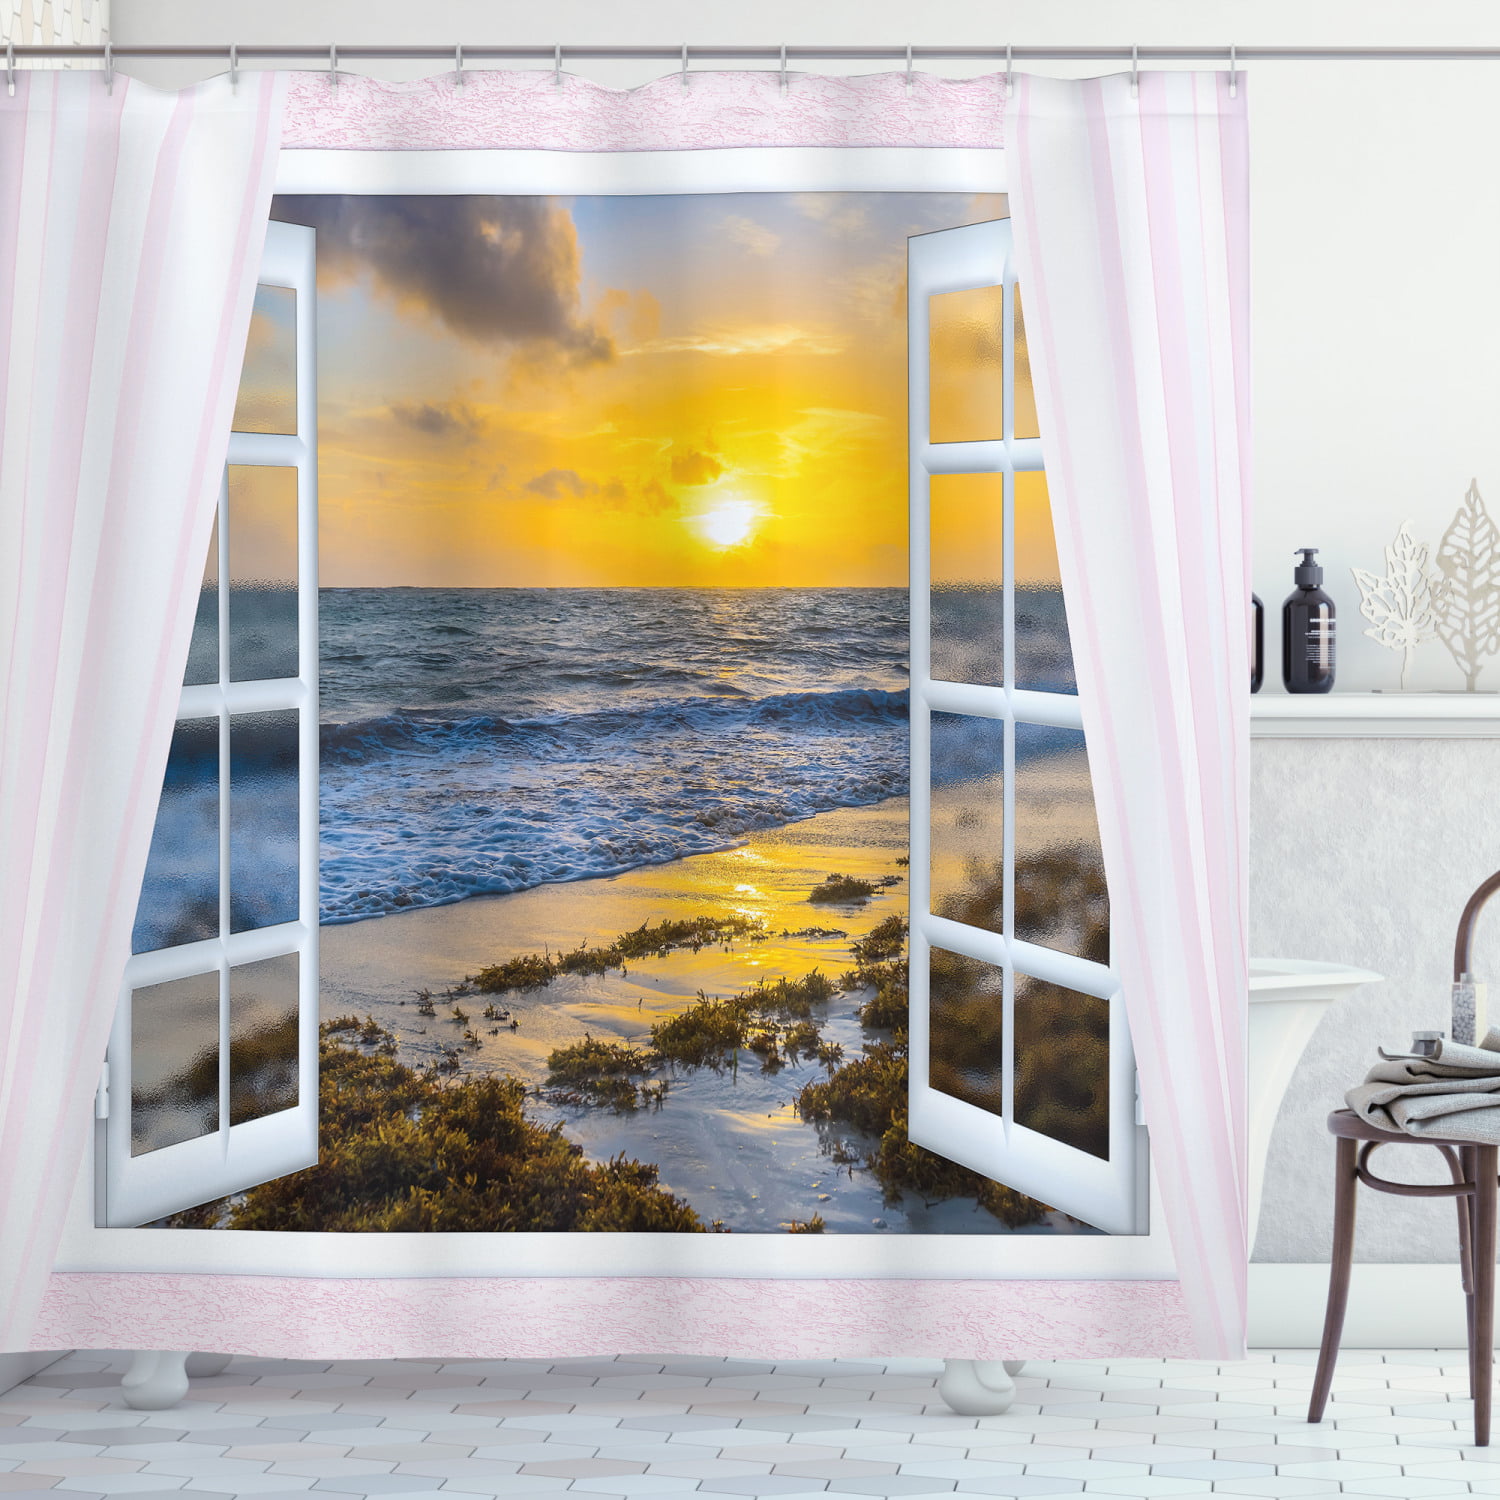 71" Waterproof Fabric Shower Curtain Bathroom home decor Sea bridge and sunset 